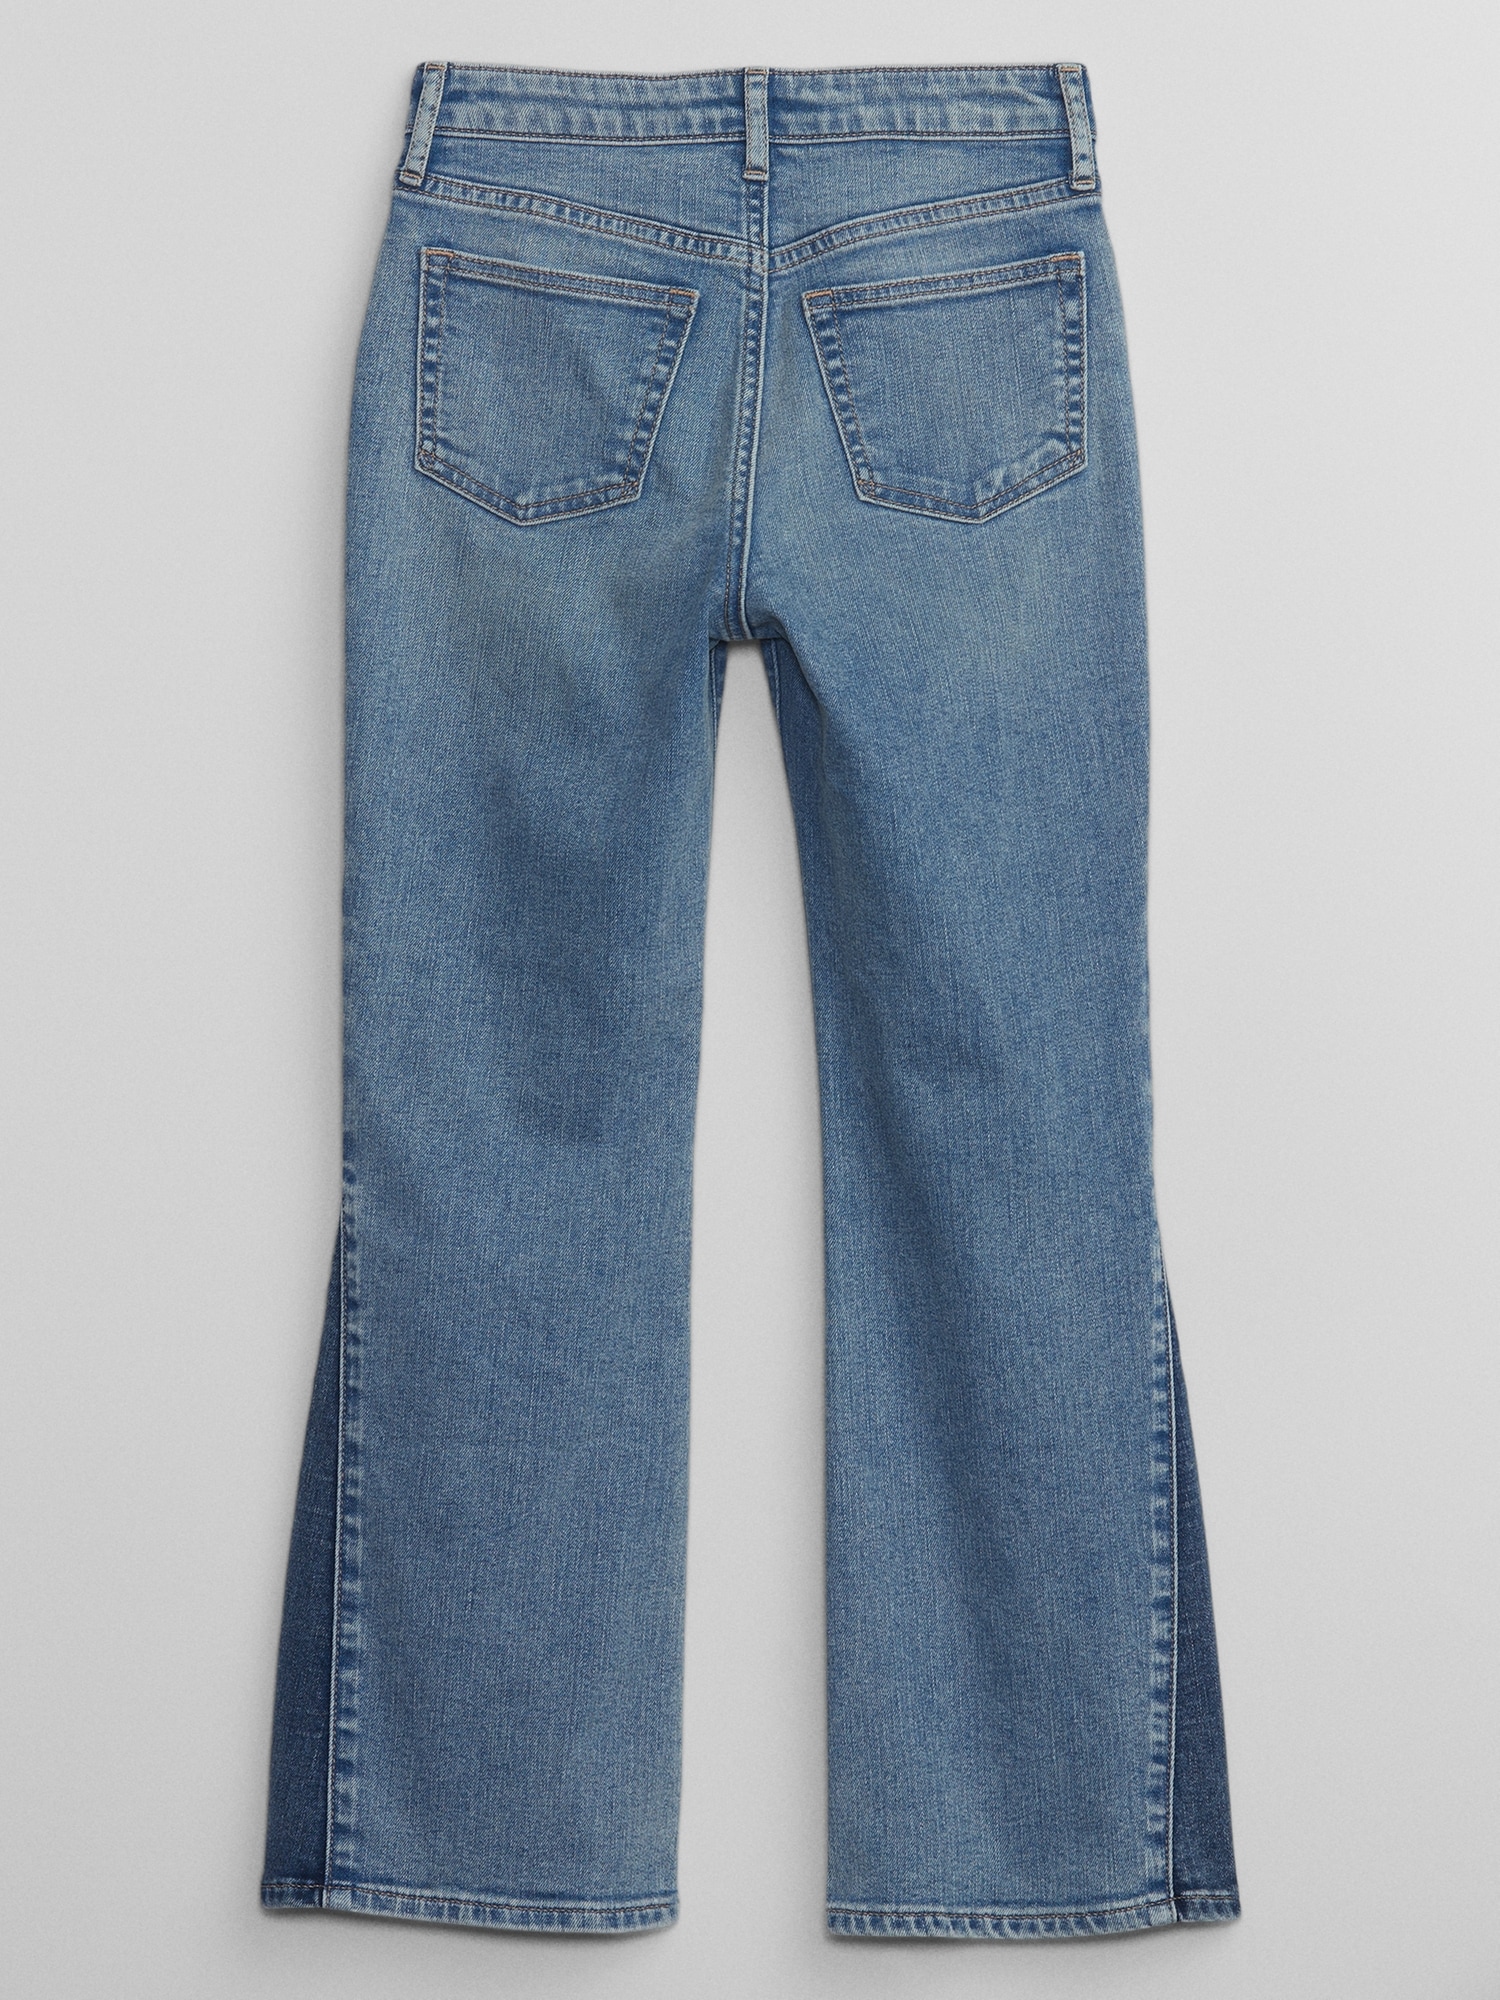 Gap × LoveShackFancy Kids High Rise Floral '70s Flare Jeans